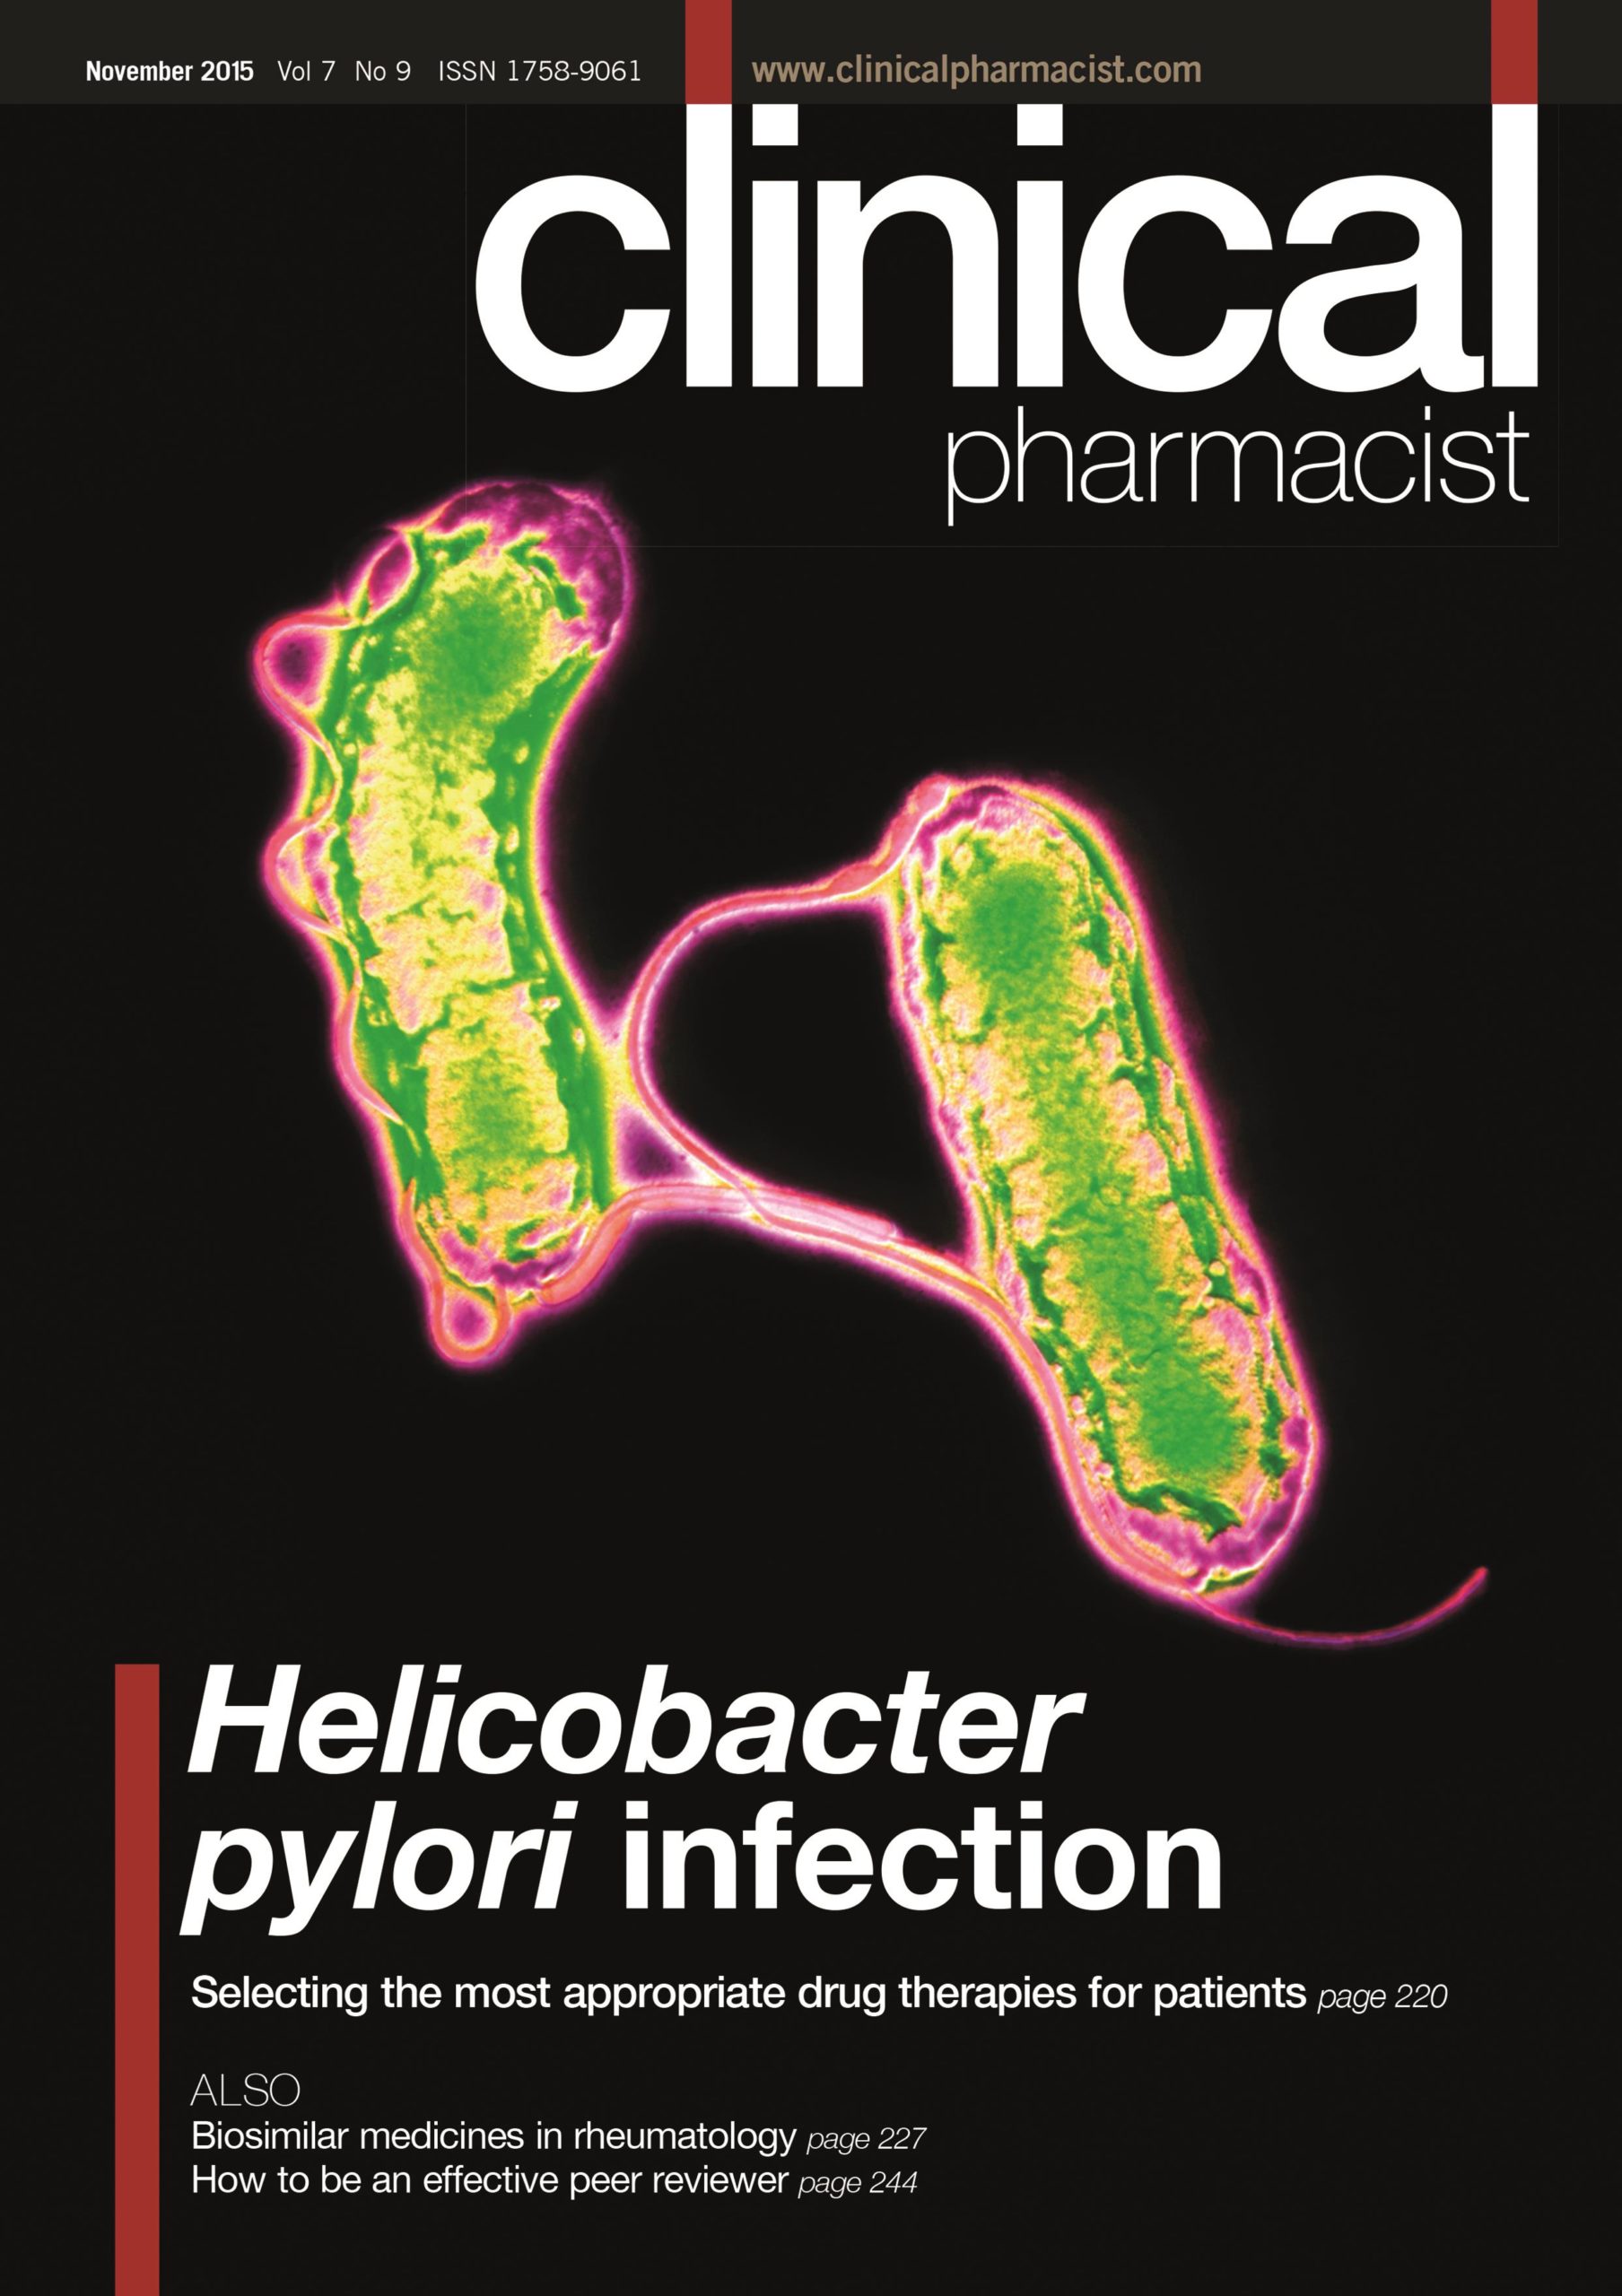 Publication issue cover for CP, November 2015, Vol 7, No 10